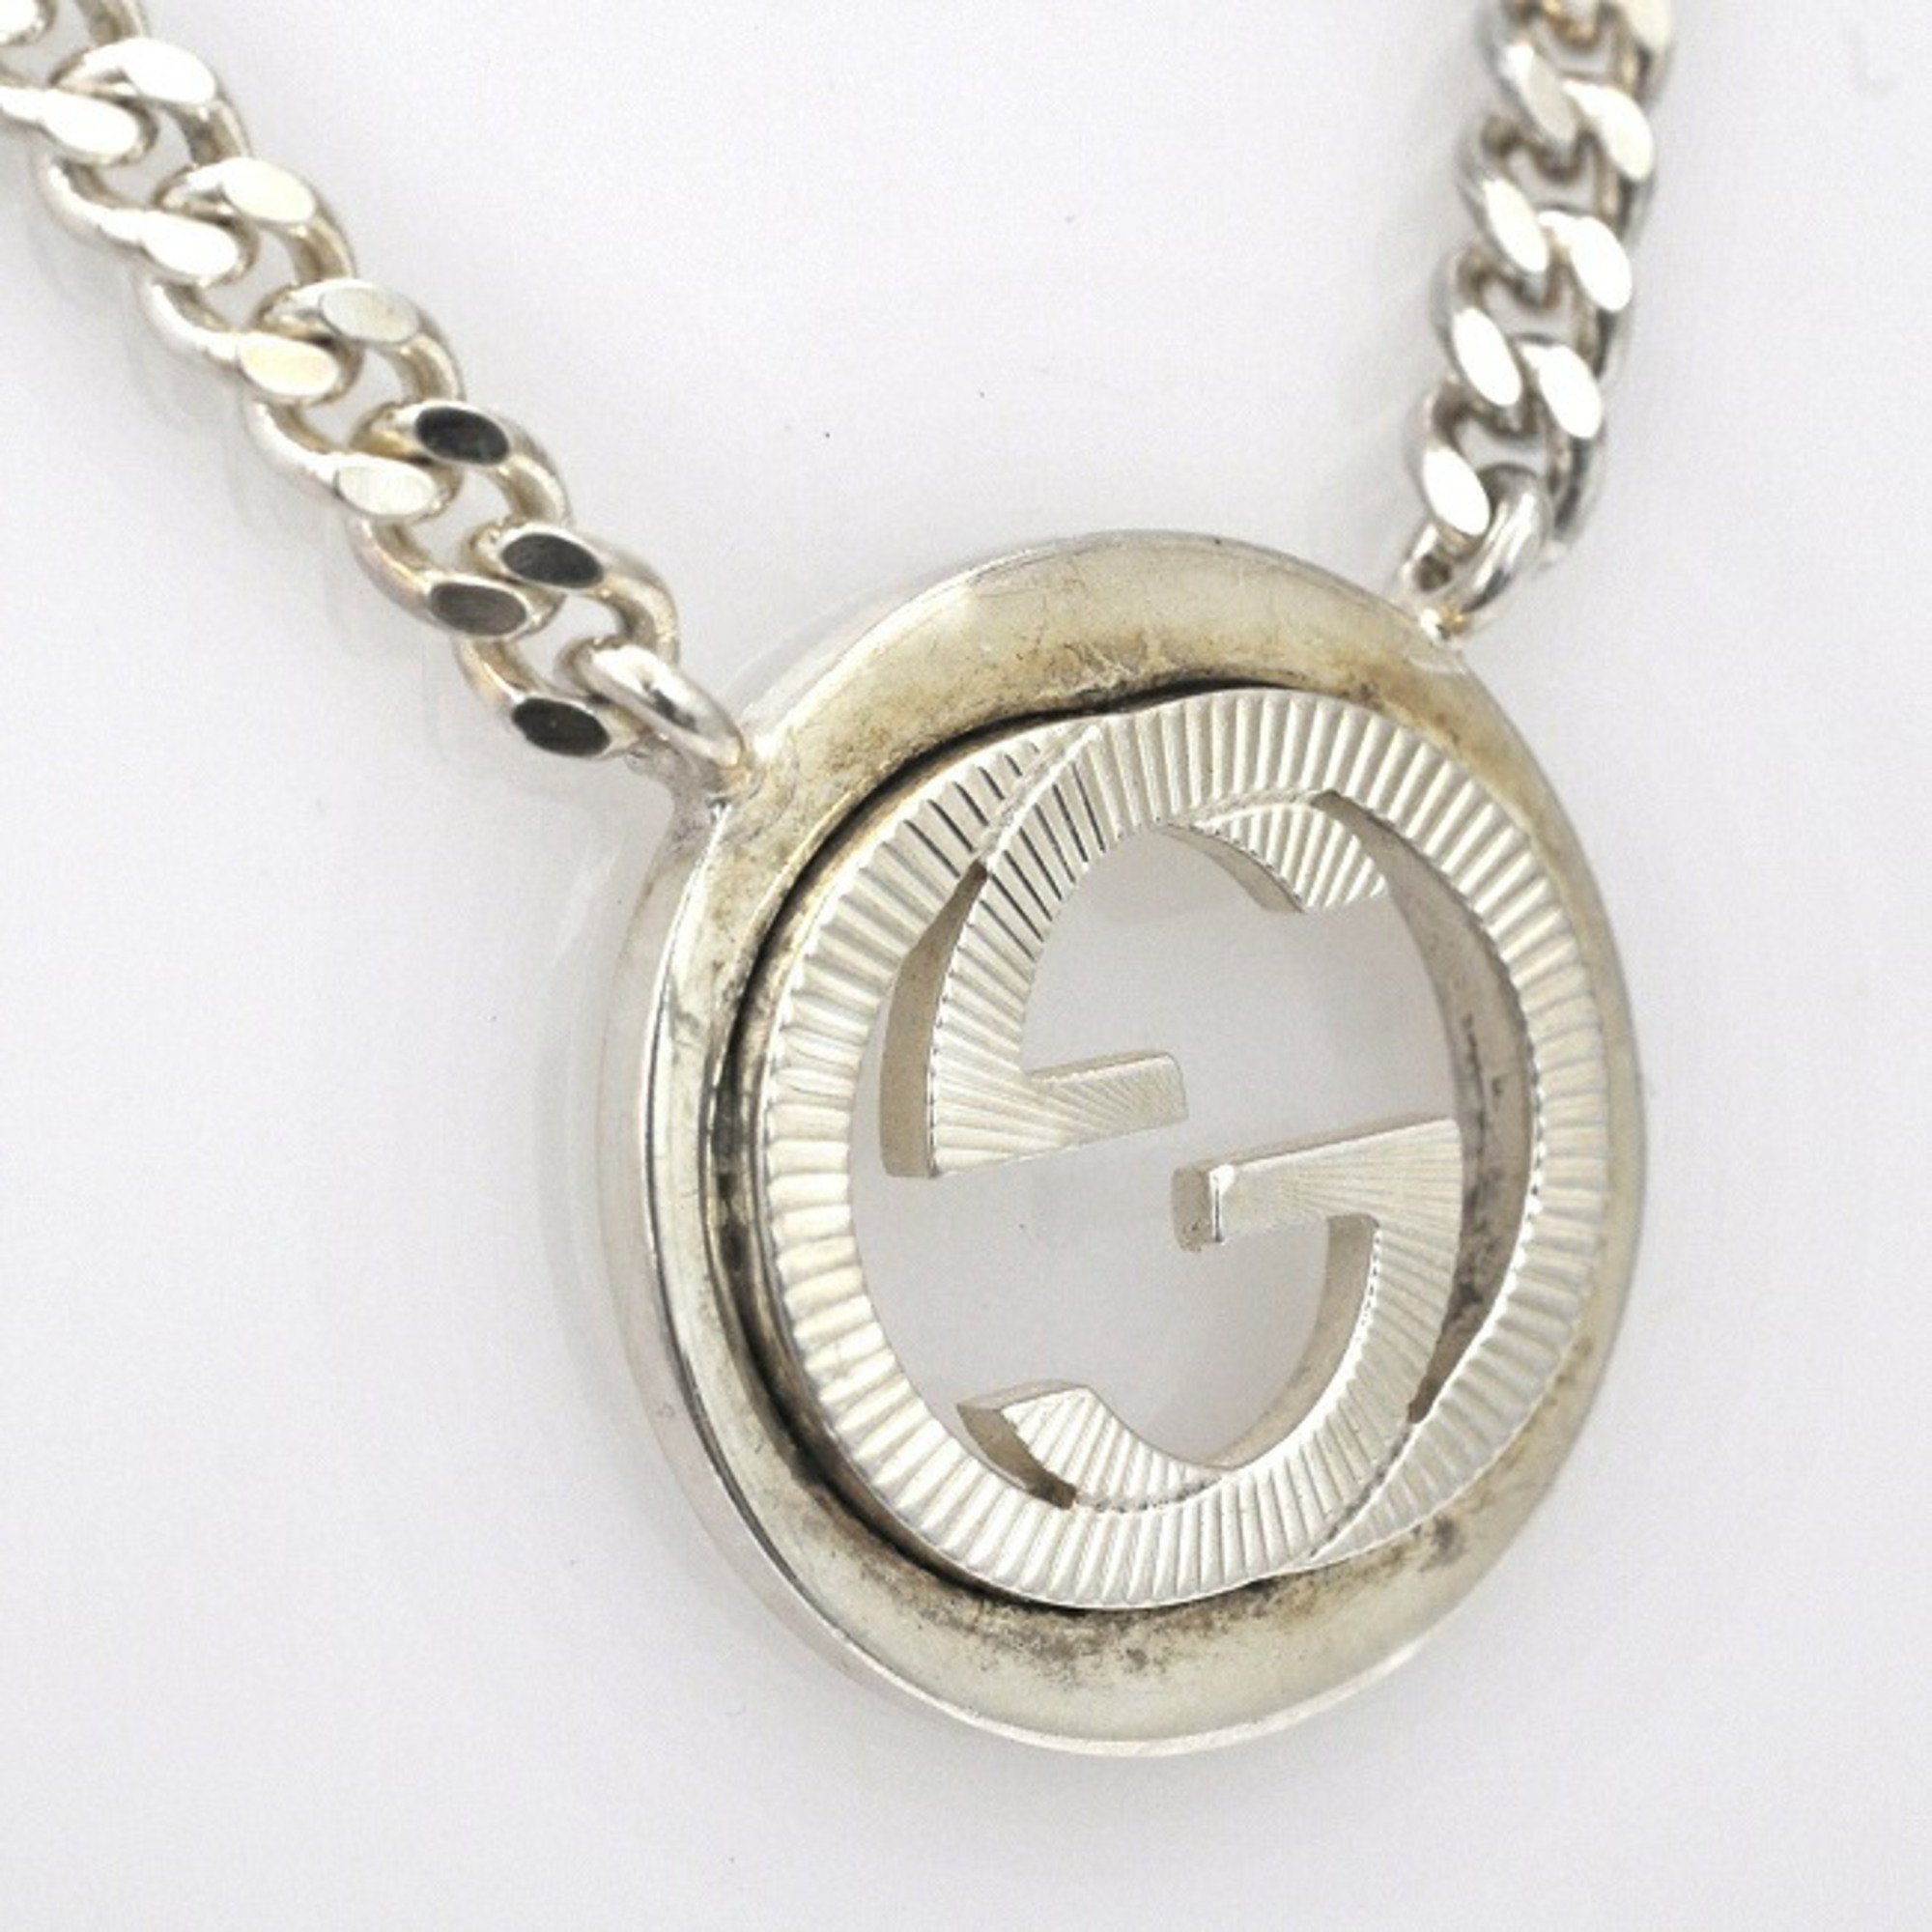 Gucci Necklace Silver Interlocking 246490 J8400 8106 GG Ag 925 GUCCI Engraved Jewelry Men's Women's Unisex Pendant